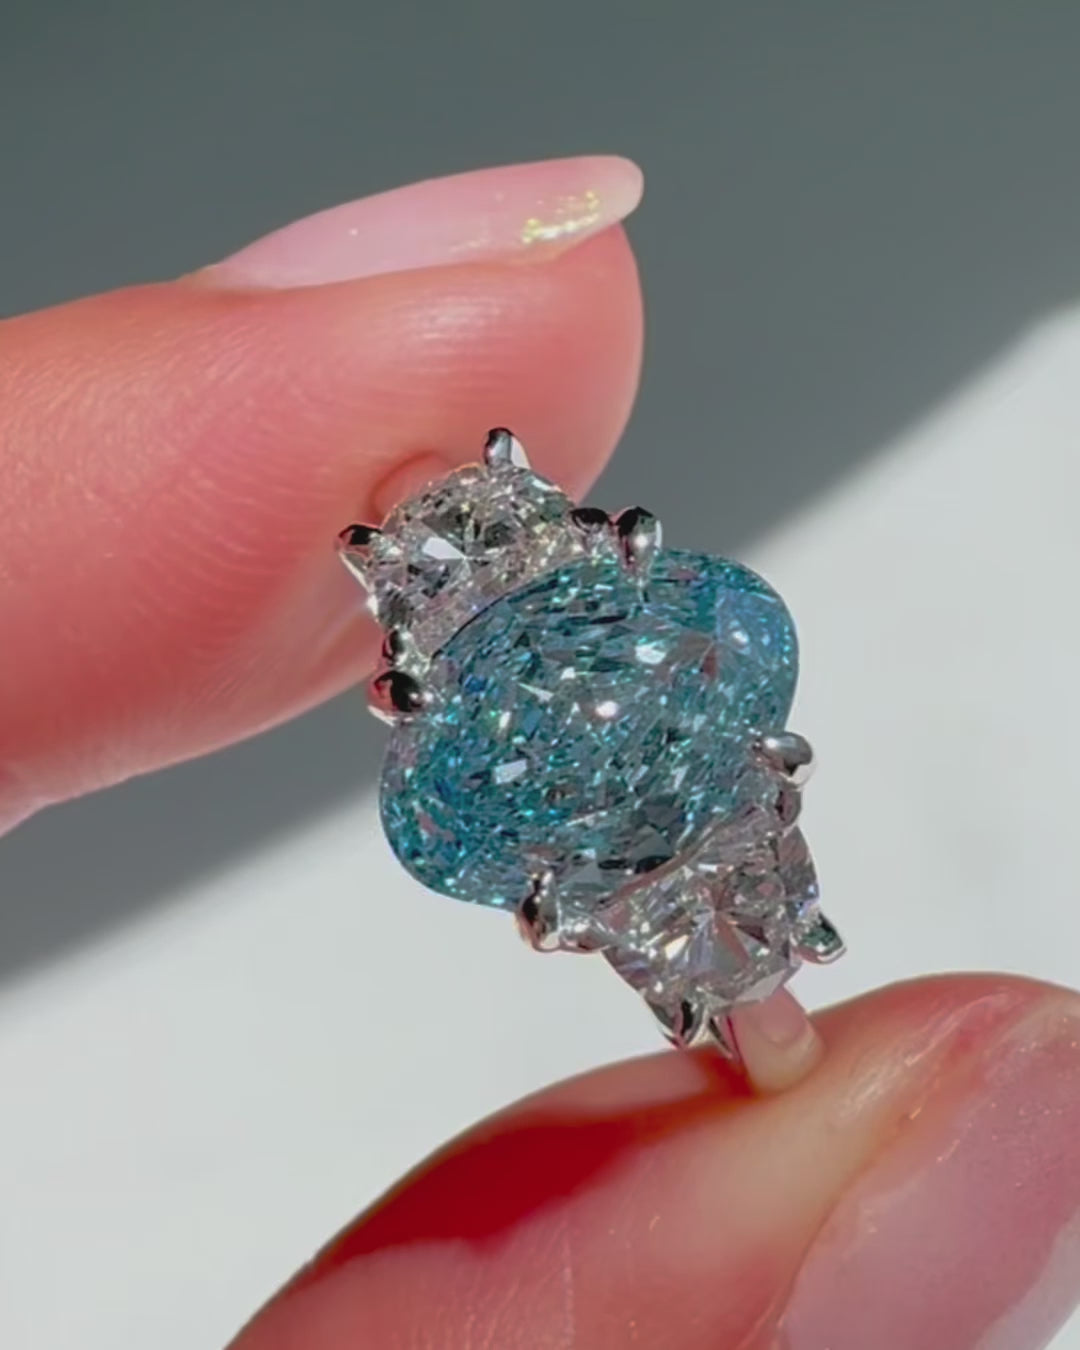 2ct oval blue diamond ring with half moon stones